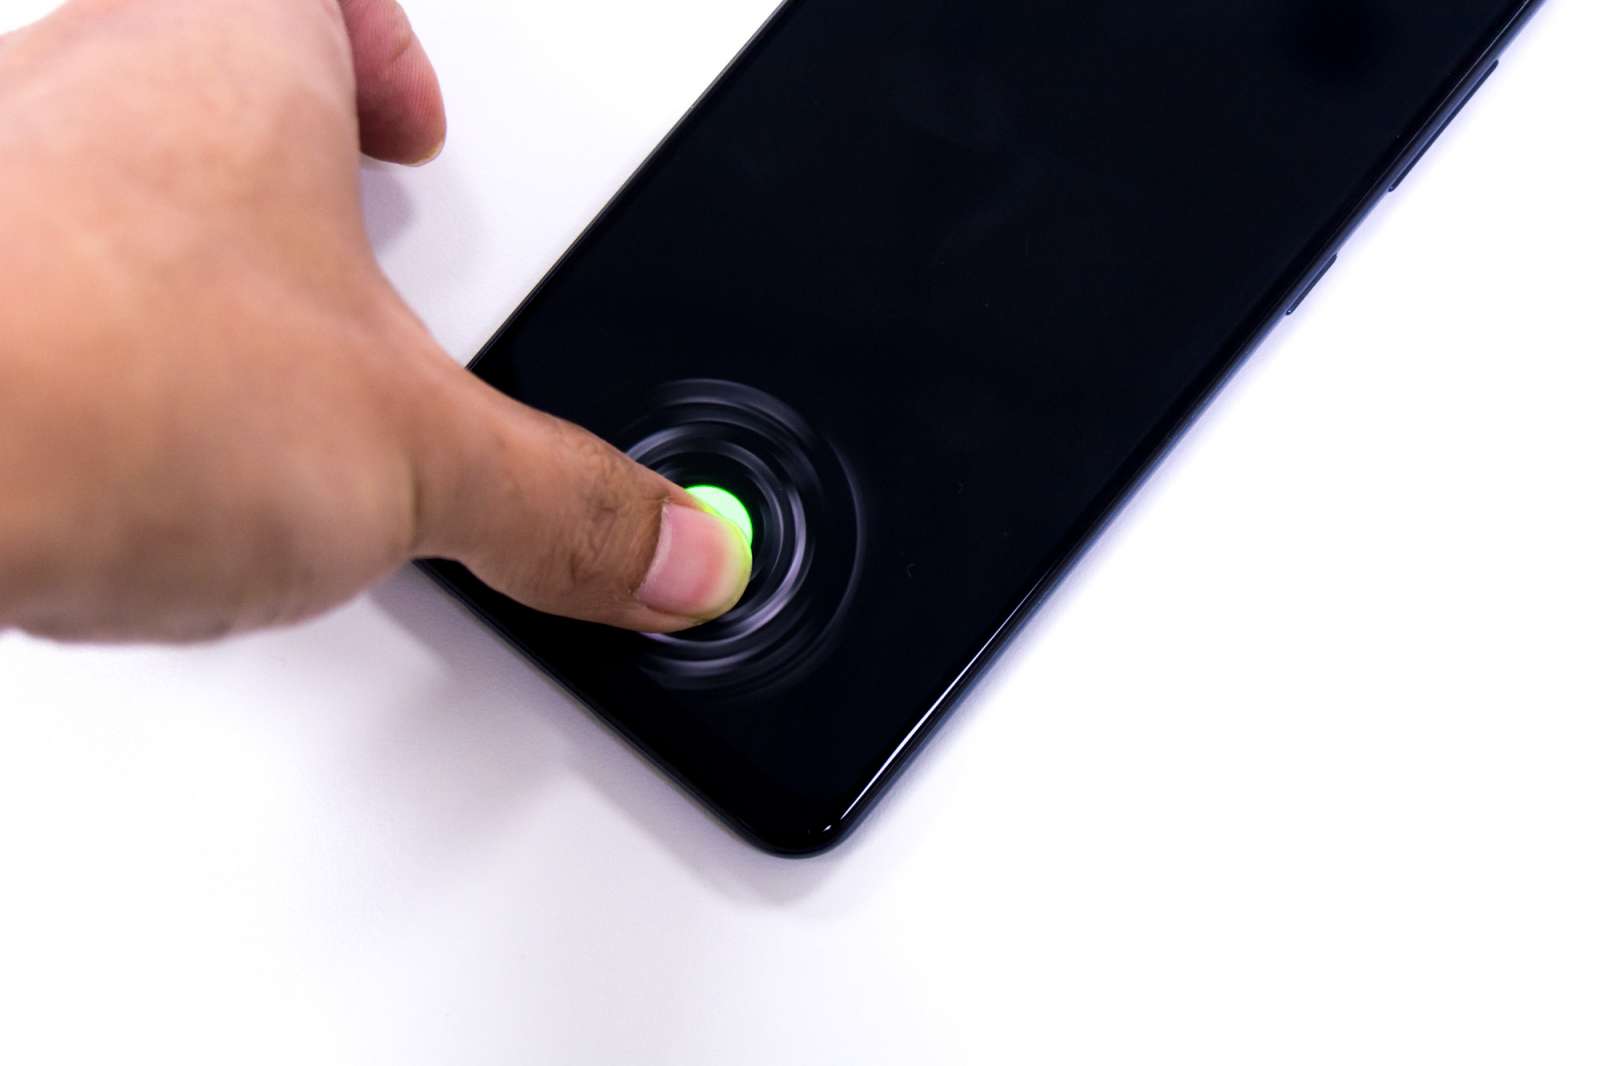 In-display fingerprint scanner - Samsung Galaxy A50 (Philippines)